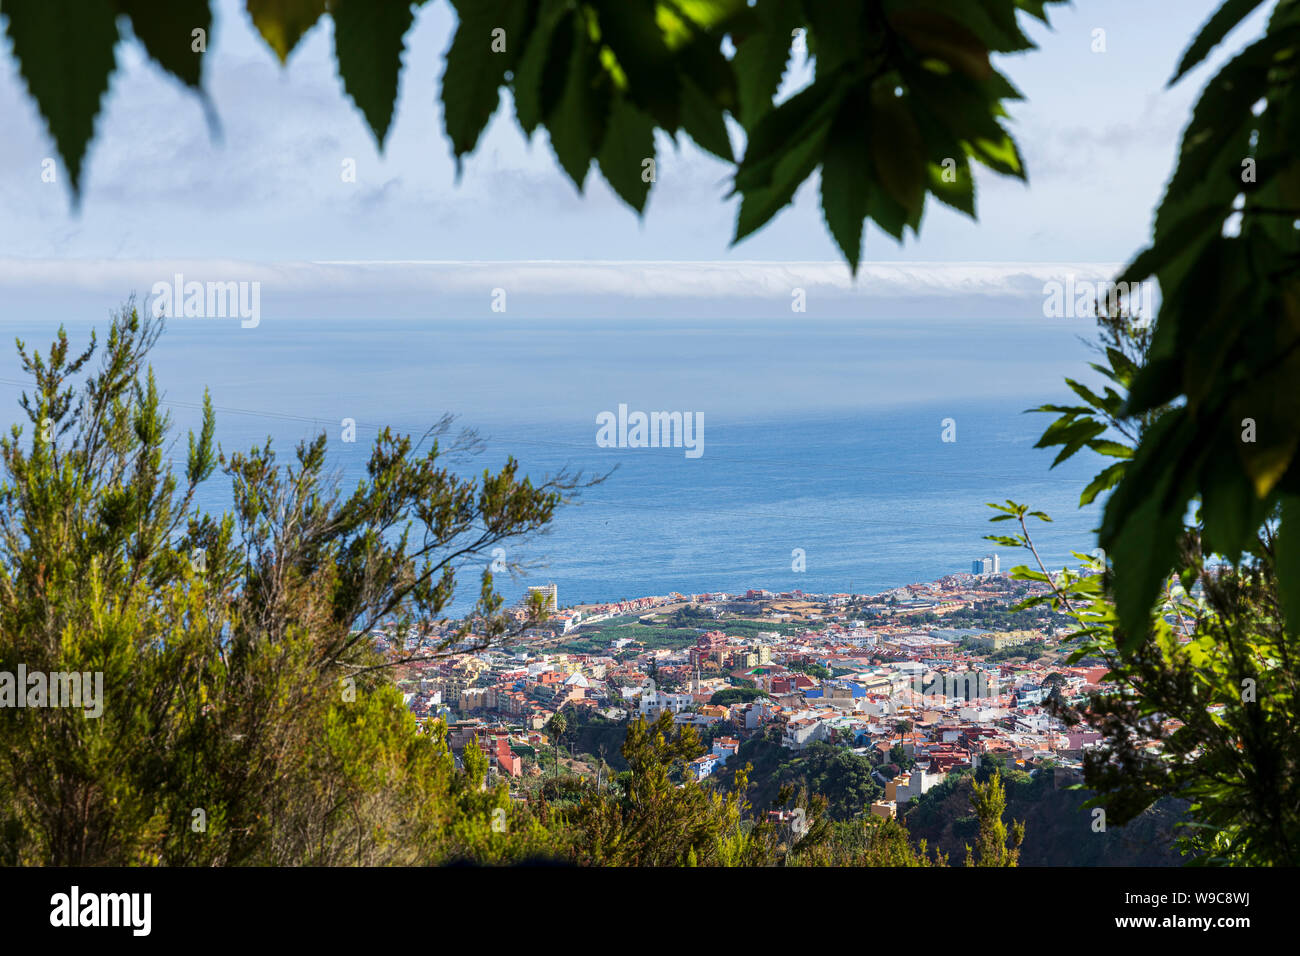 View over the Orotava Valley leading down to Puerto de La Cruz in Tenerife, Canary Islands, Spain Stock Photo